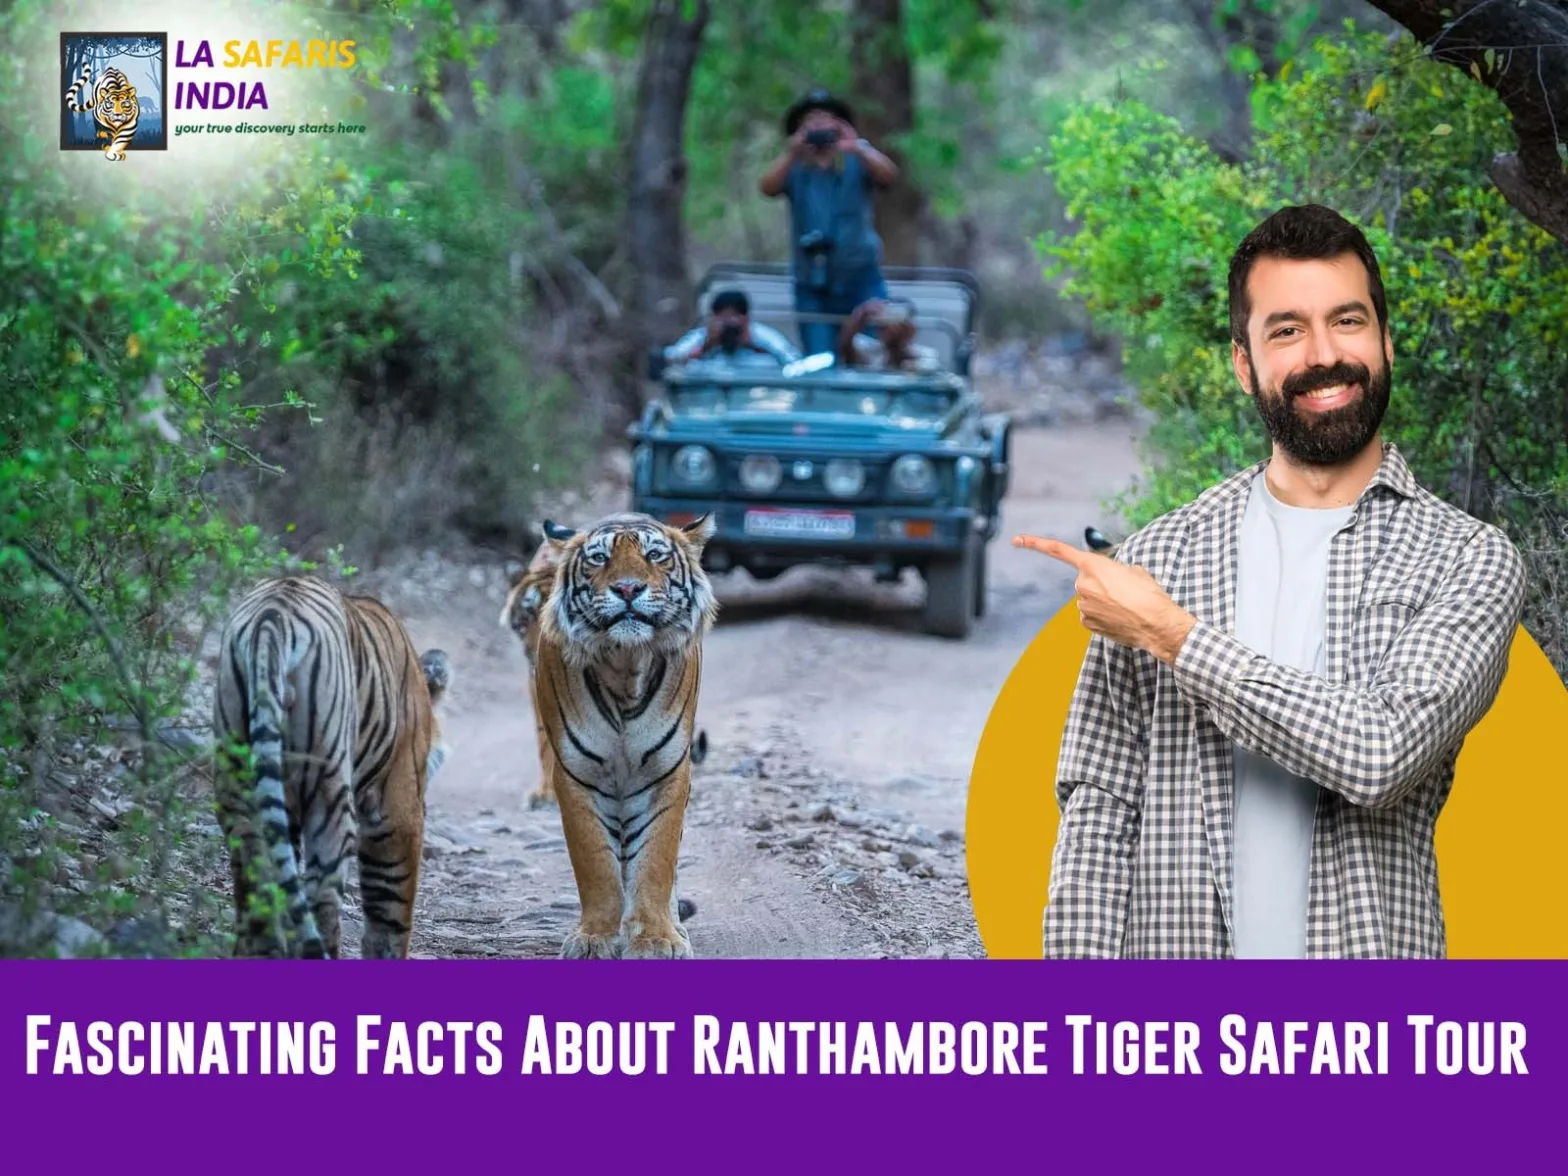 Ranthambore Tiger Safari Tour from Delhi